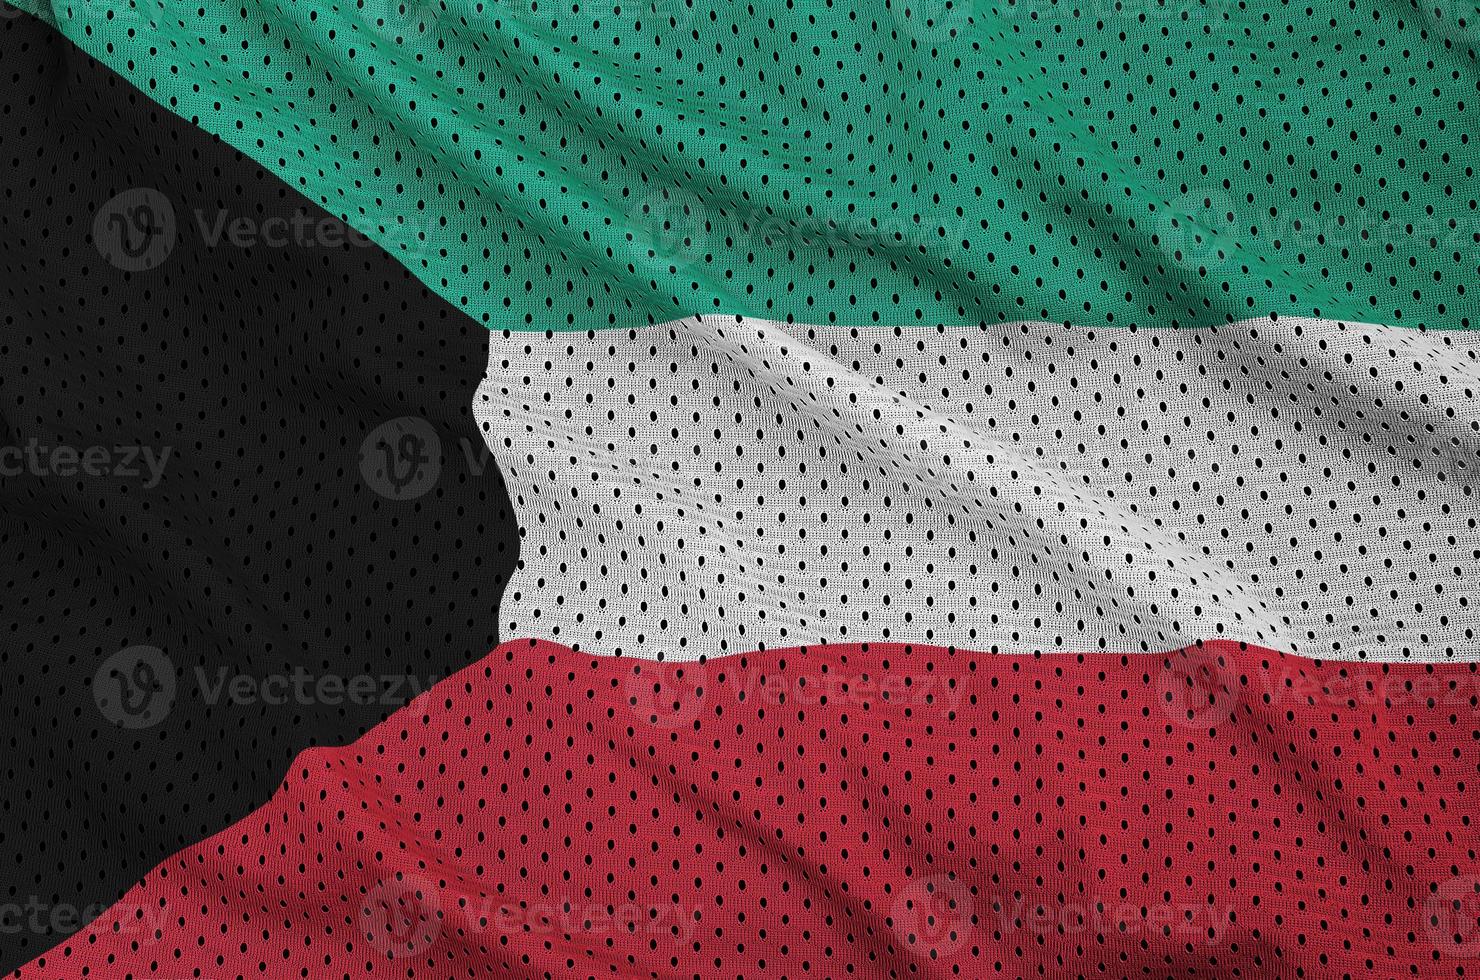 Koeweit vlag gedrukt Aan een polyester nylon- sportkleding maas kleding stof foto